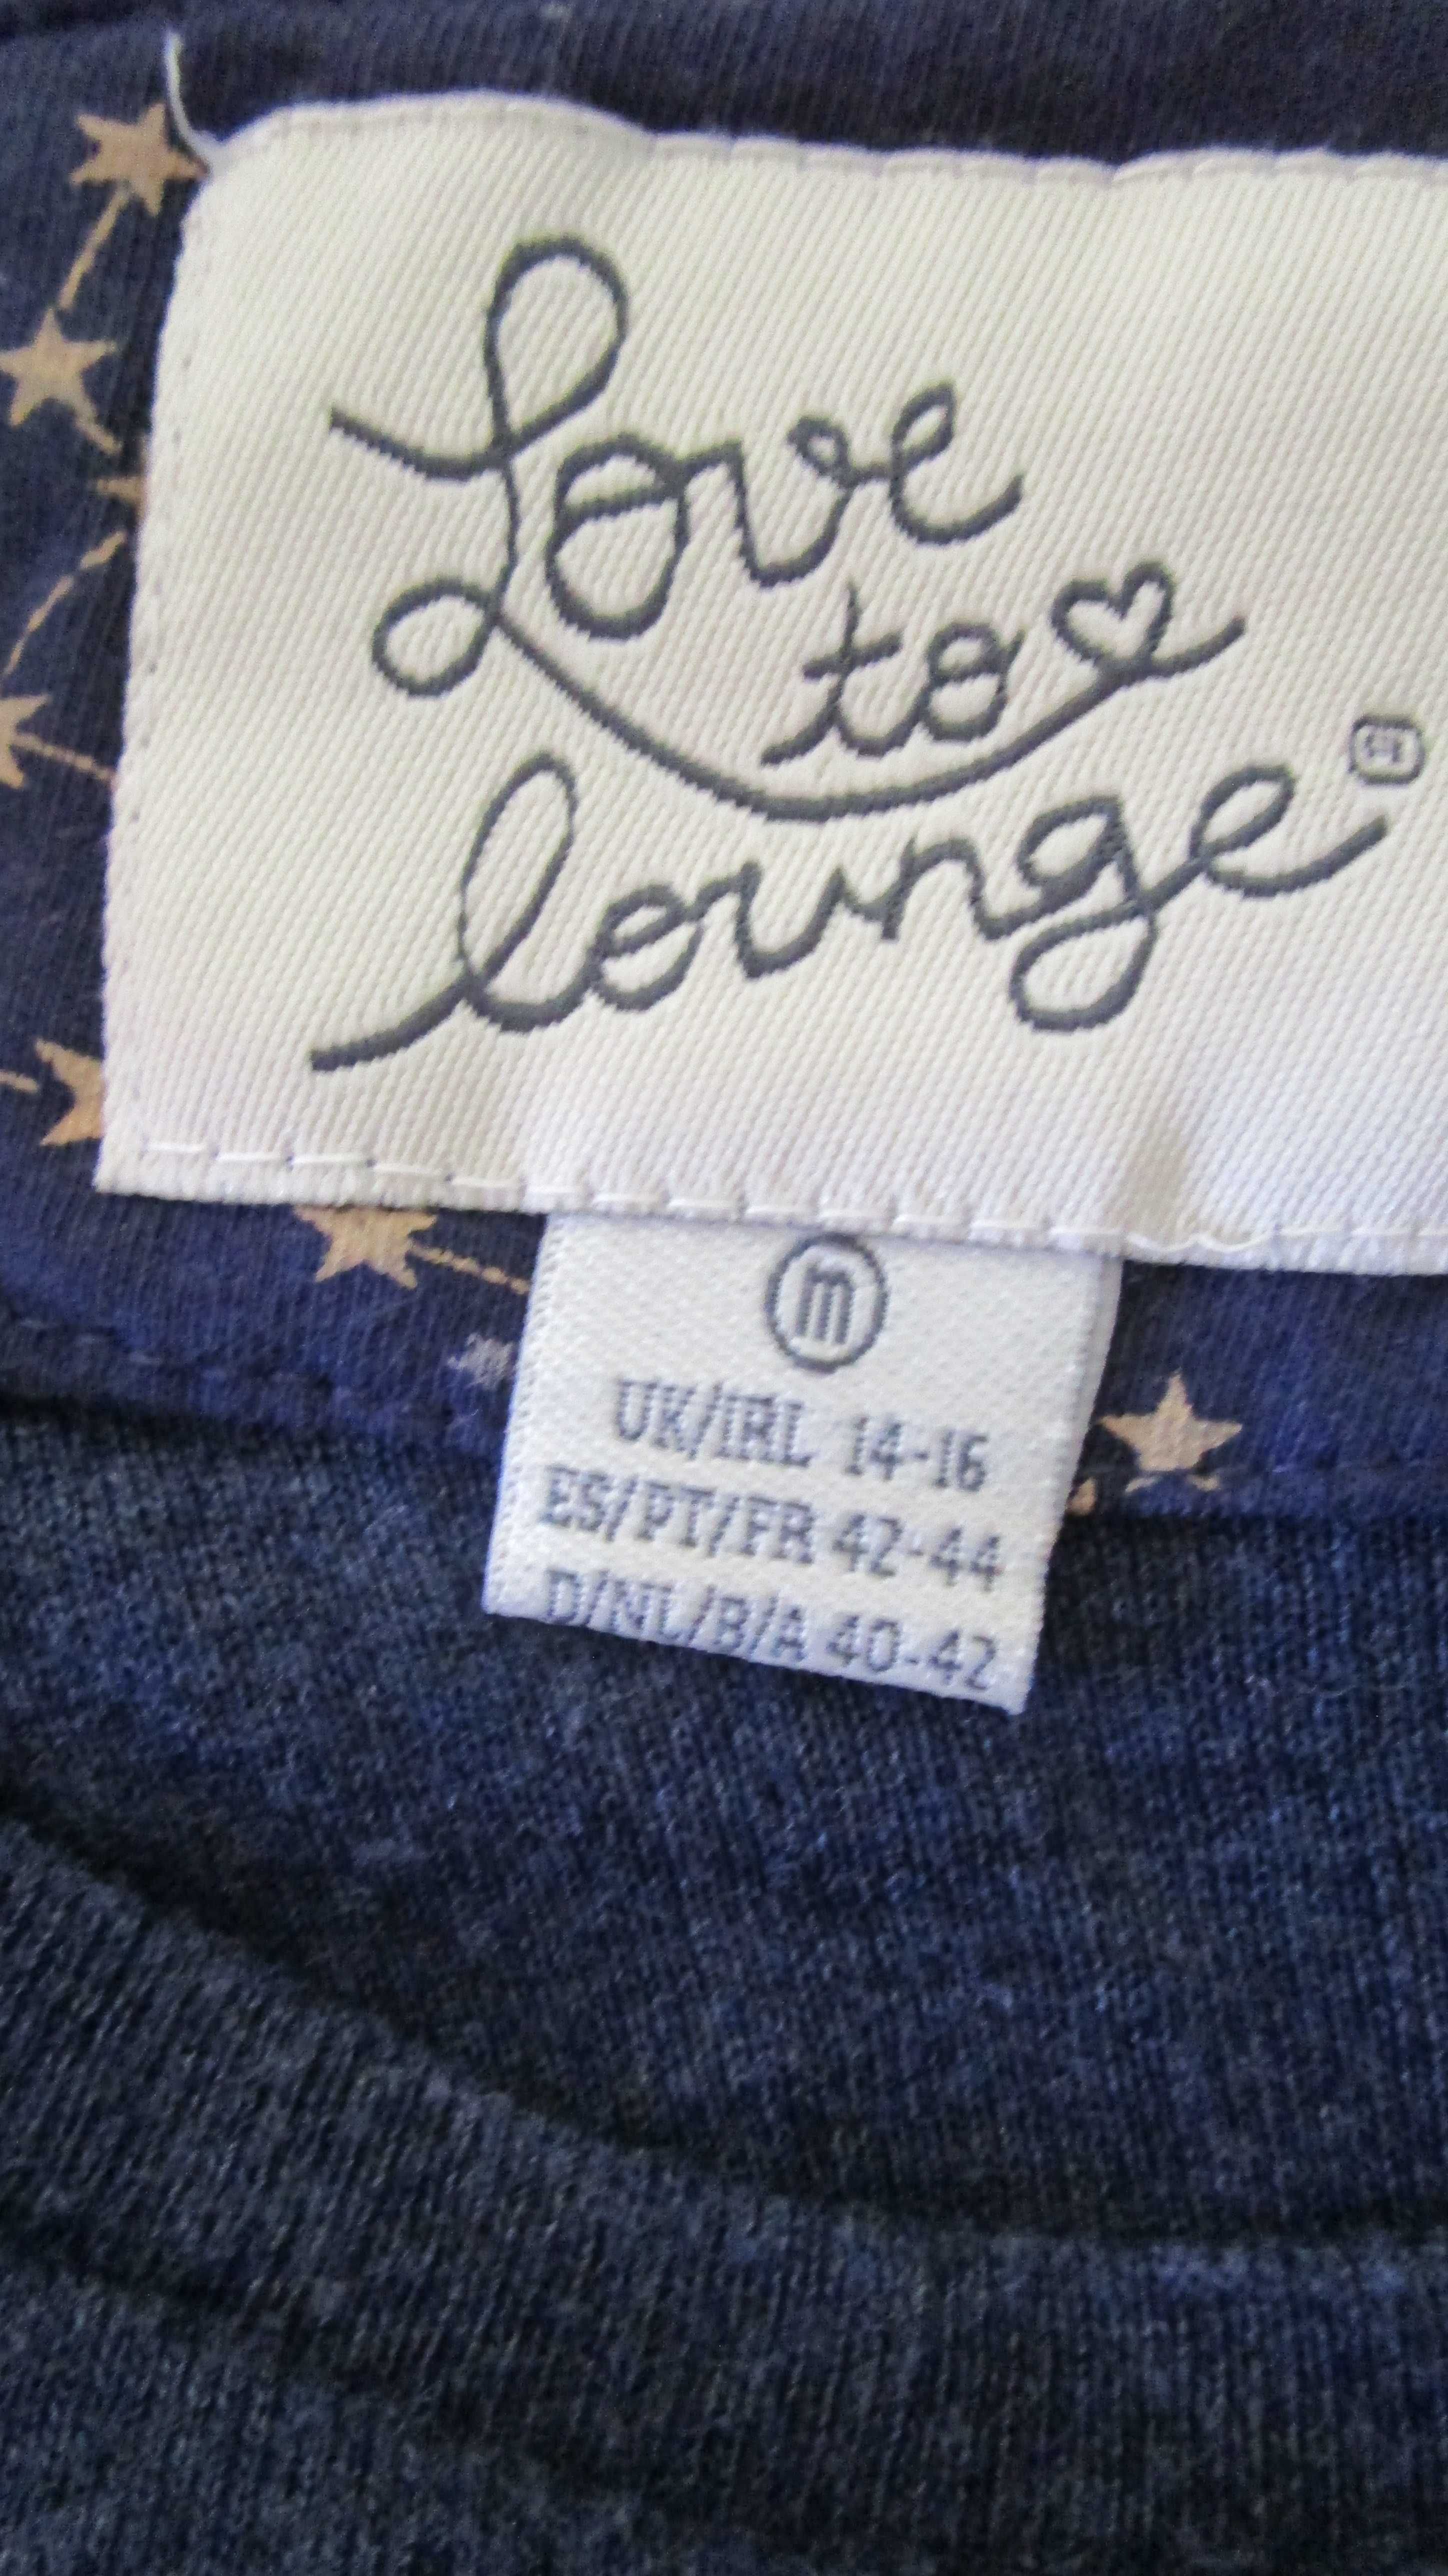 Sweathirts / Camisolas para Senhora - Tamanho M (2€ cada)